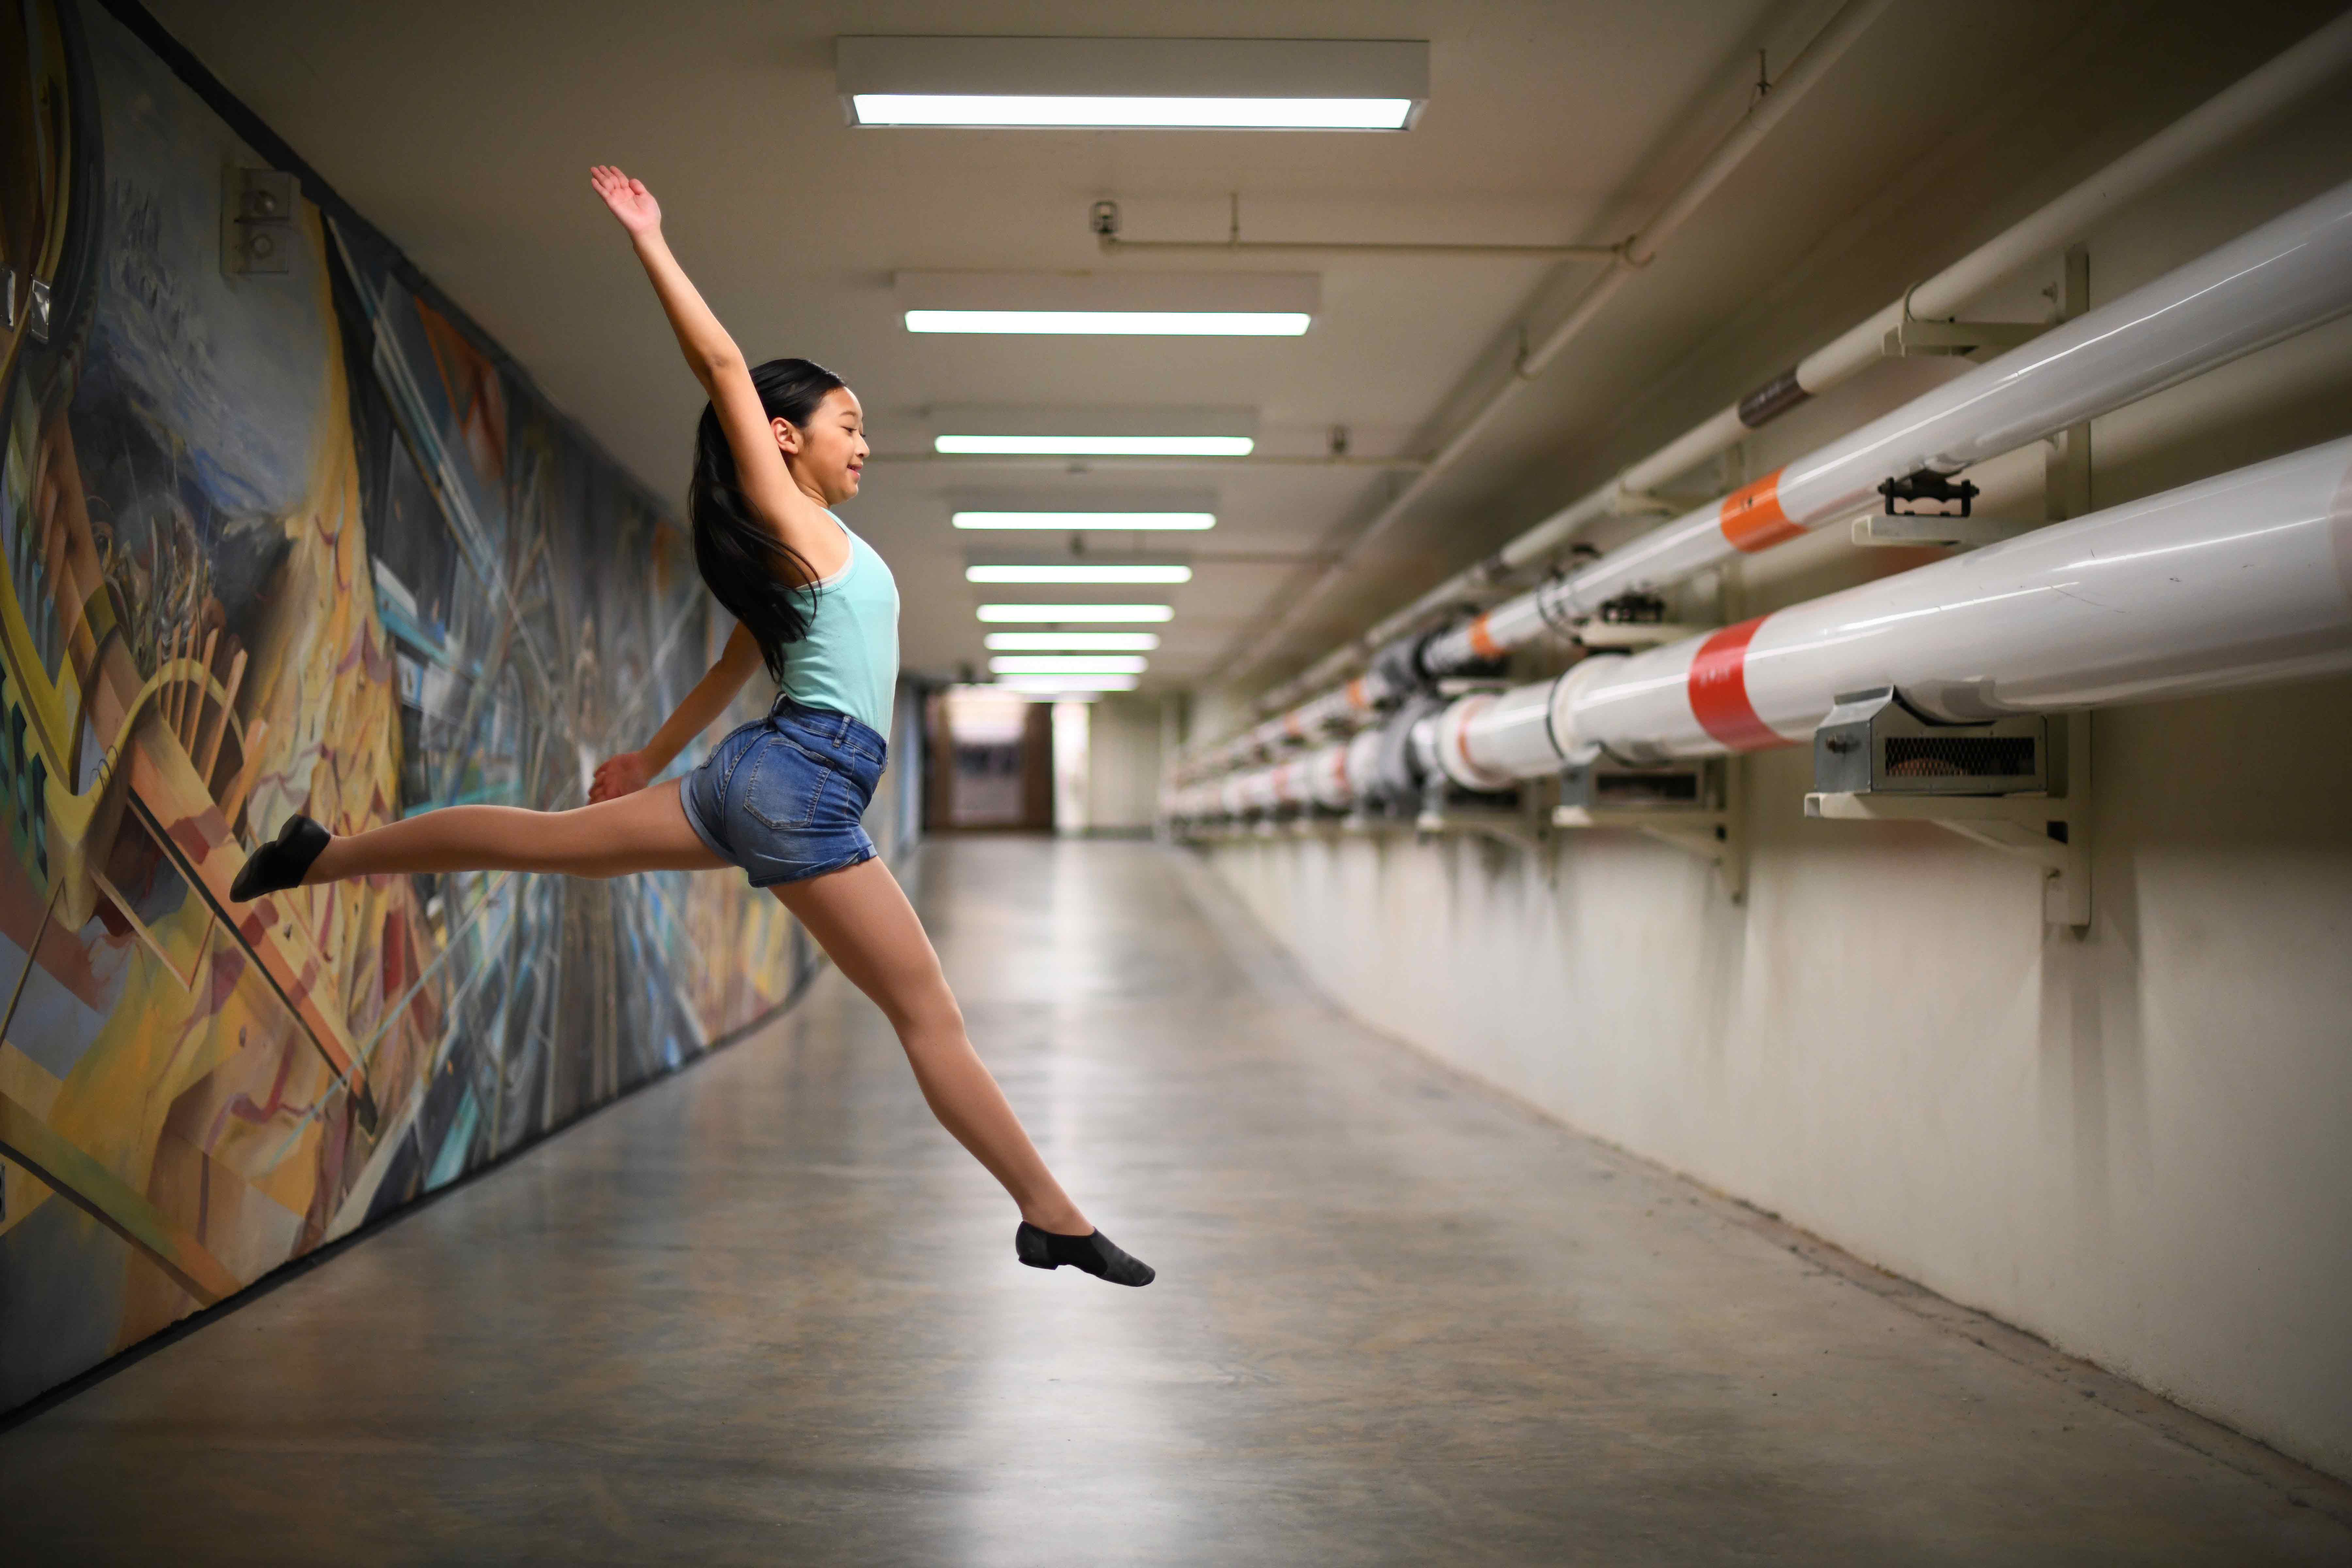 Aliyah dancing in tunnel at the university of manitoba